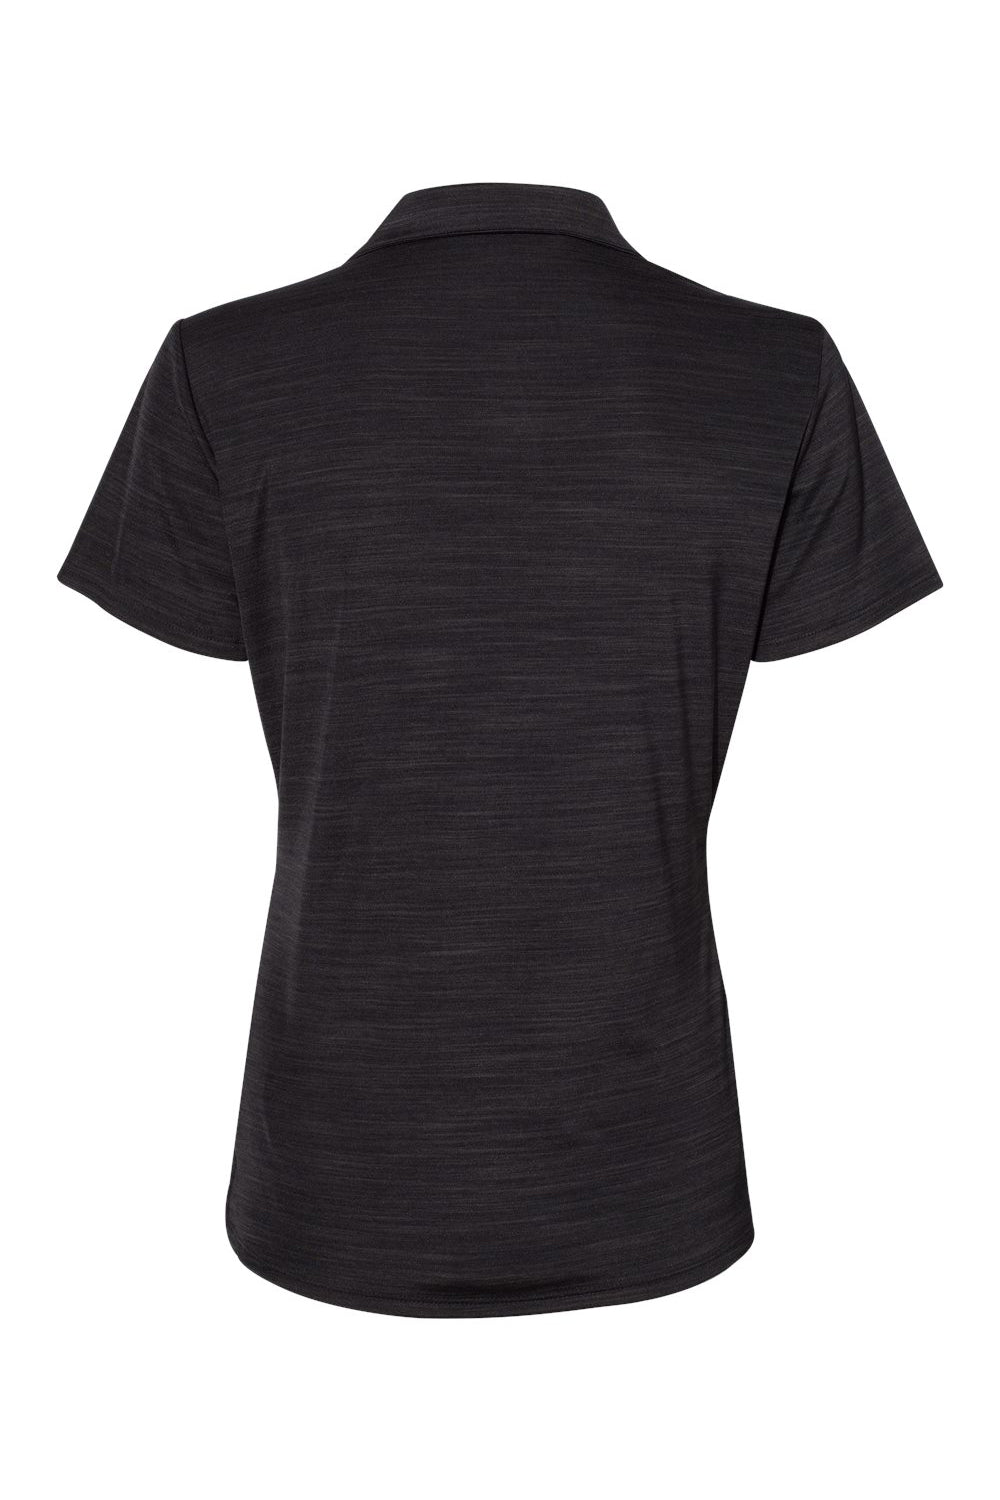 Adidas A403 Womens Melange Short Sleeve Polo Shirt Black Melange Flat Back